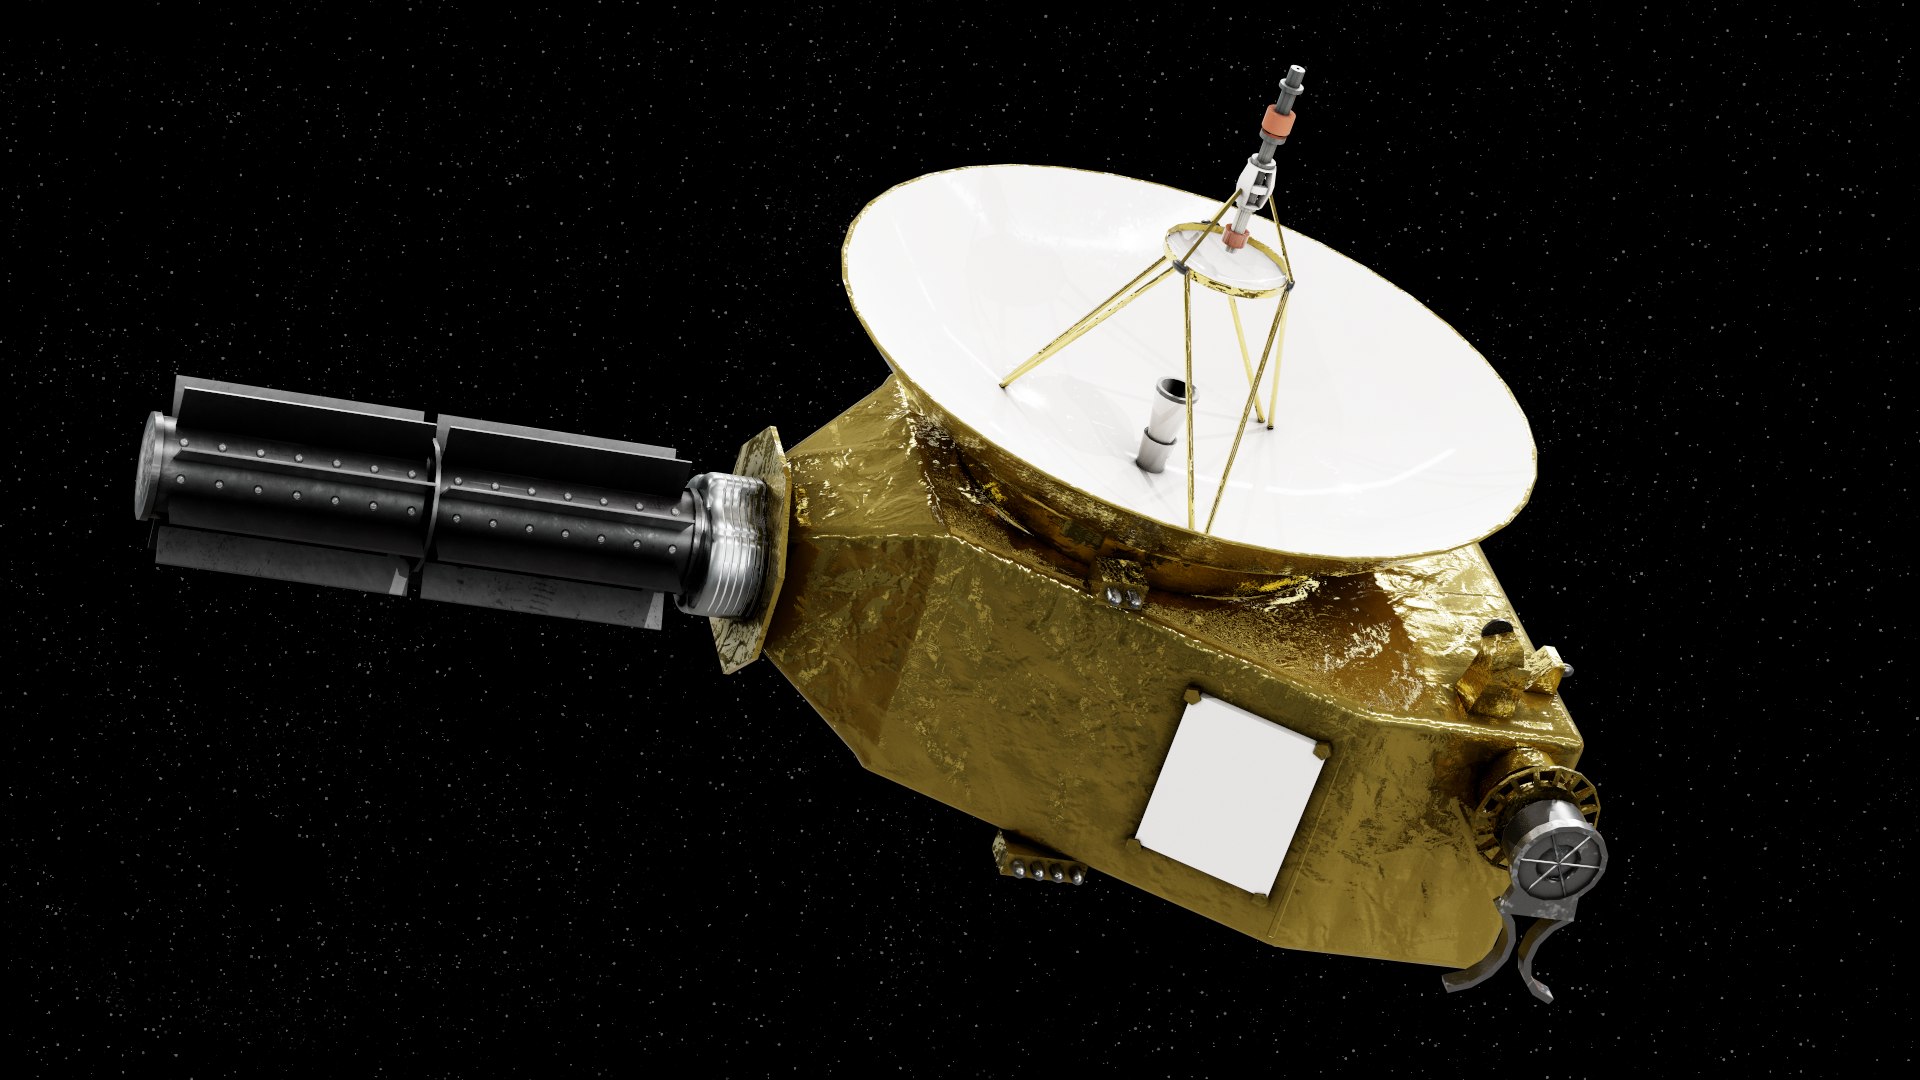 models of spacecraft new horizons